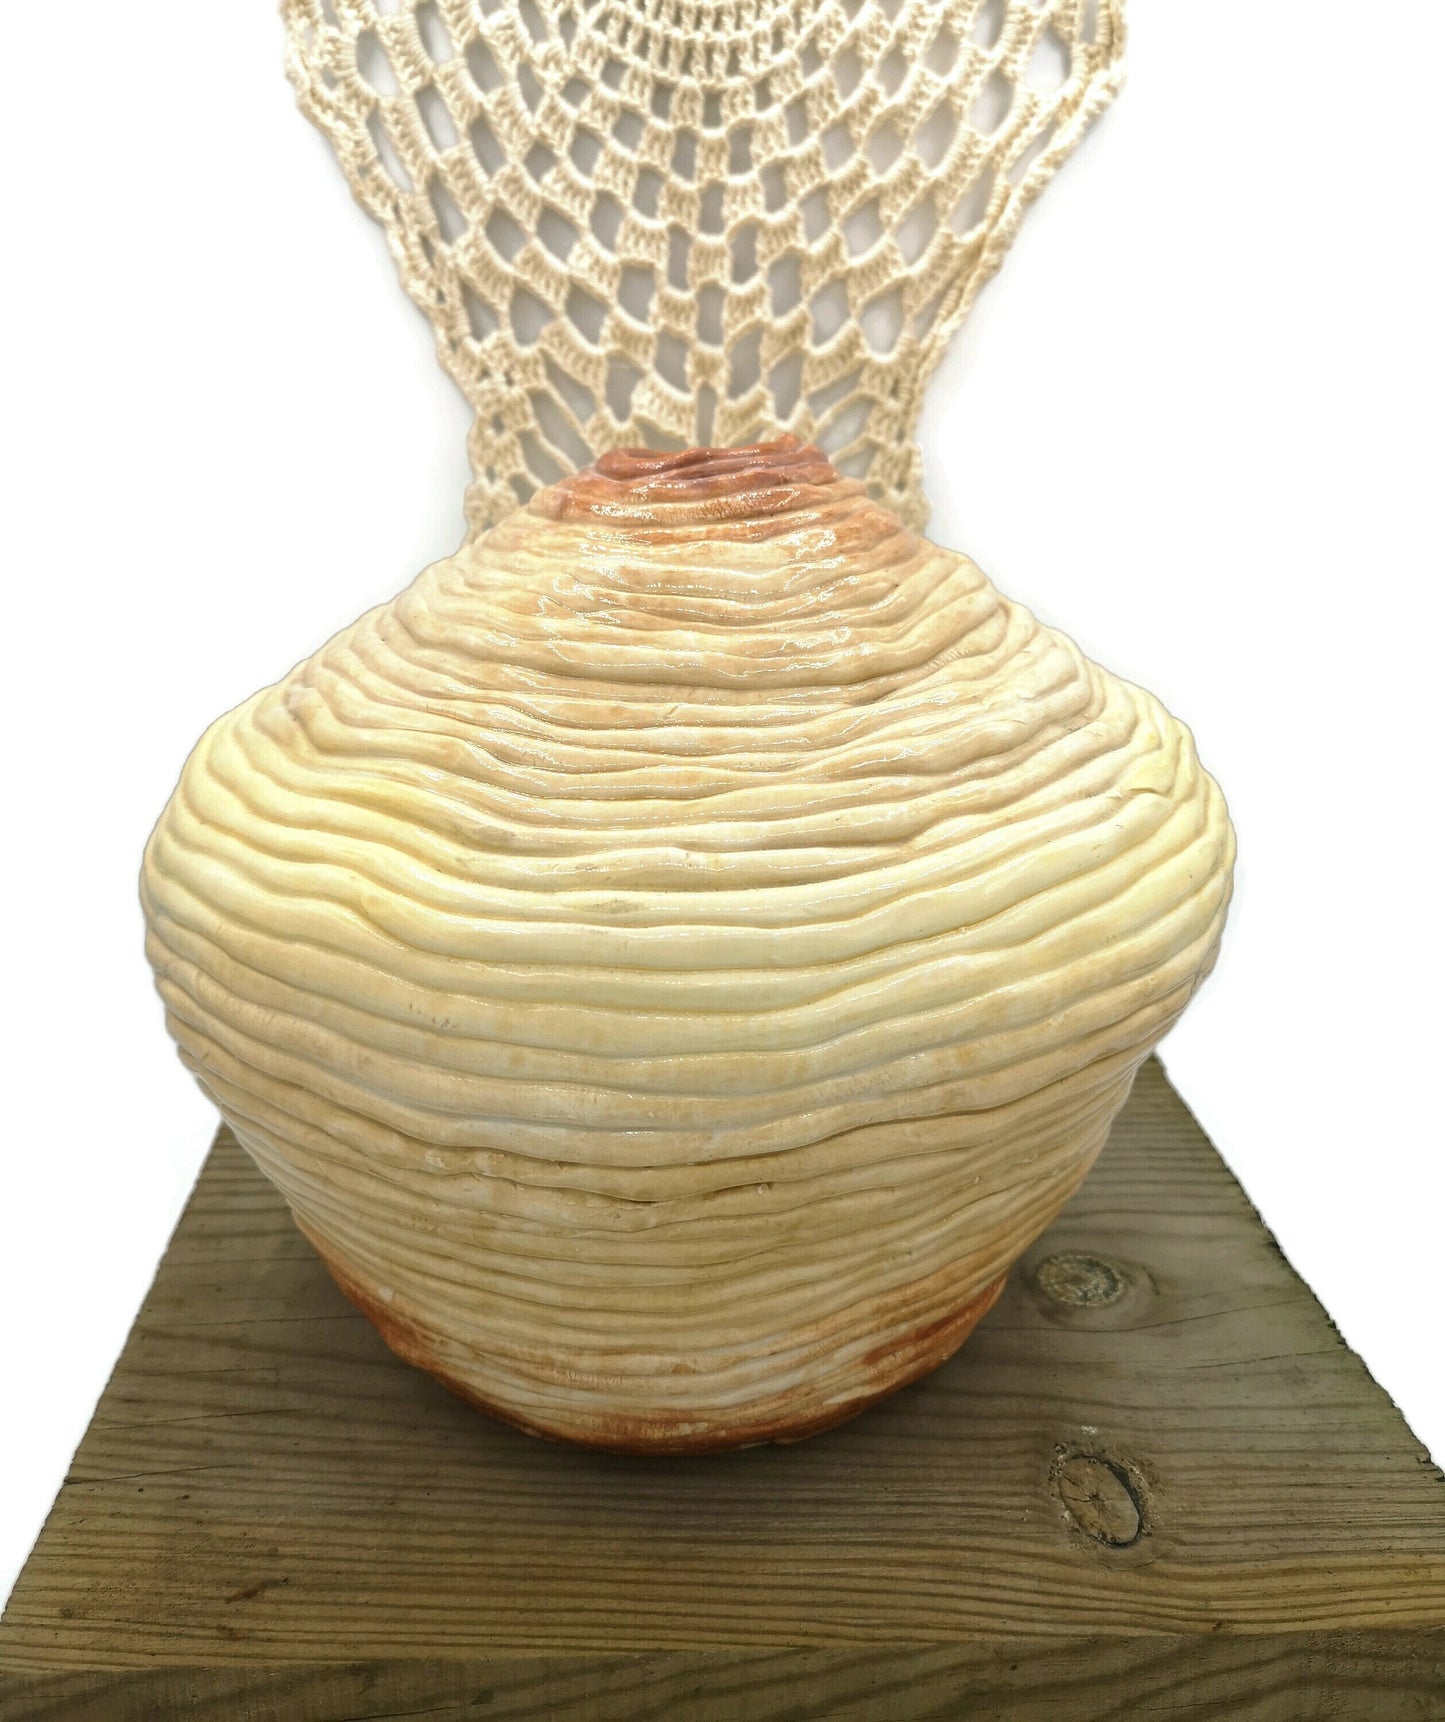 Handmade Tall Ceramic Vase, Sculptural Bud Vase With Antique Look, Art Decor Unique Wedding Gift For Couple, Large Floor Vase Textured - Ceramica Ana Rafael